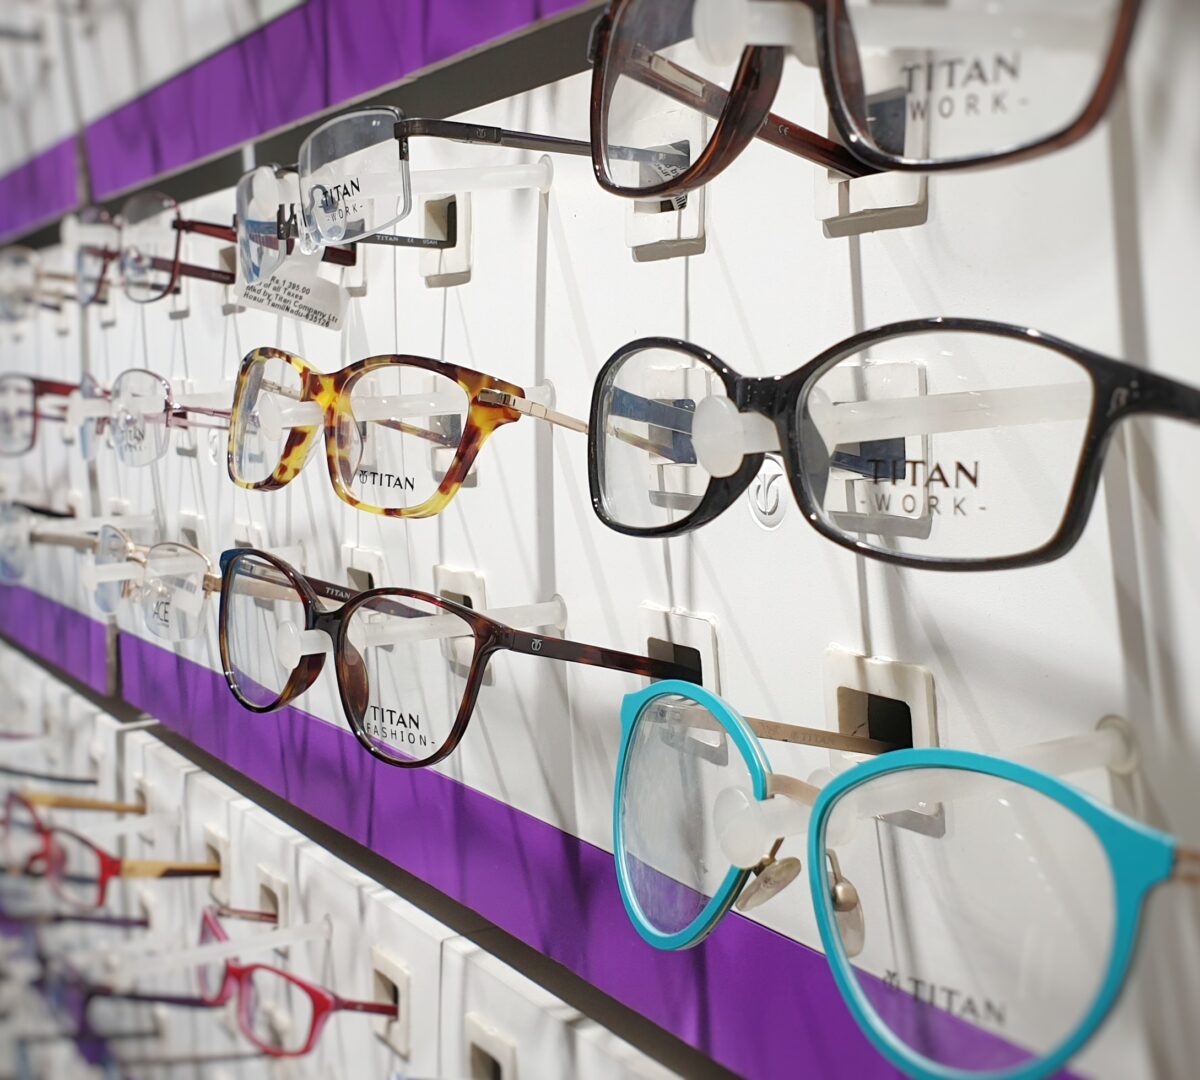 Glasses Shop